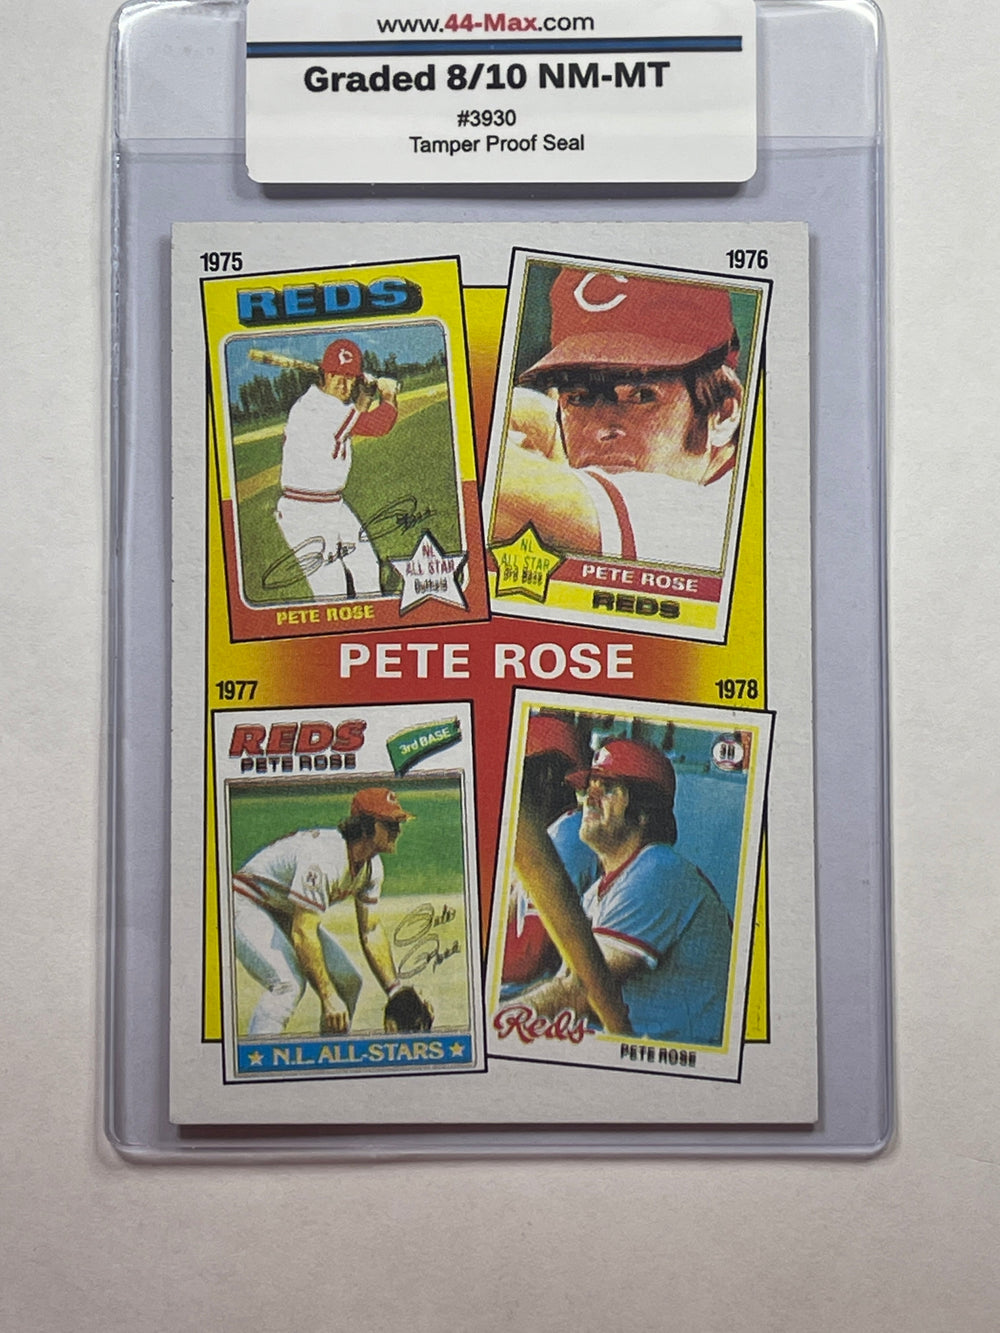 Pete Rose 1986 Topps Baseball Card. 44-Max 8/10 NM-MT #3930